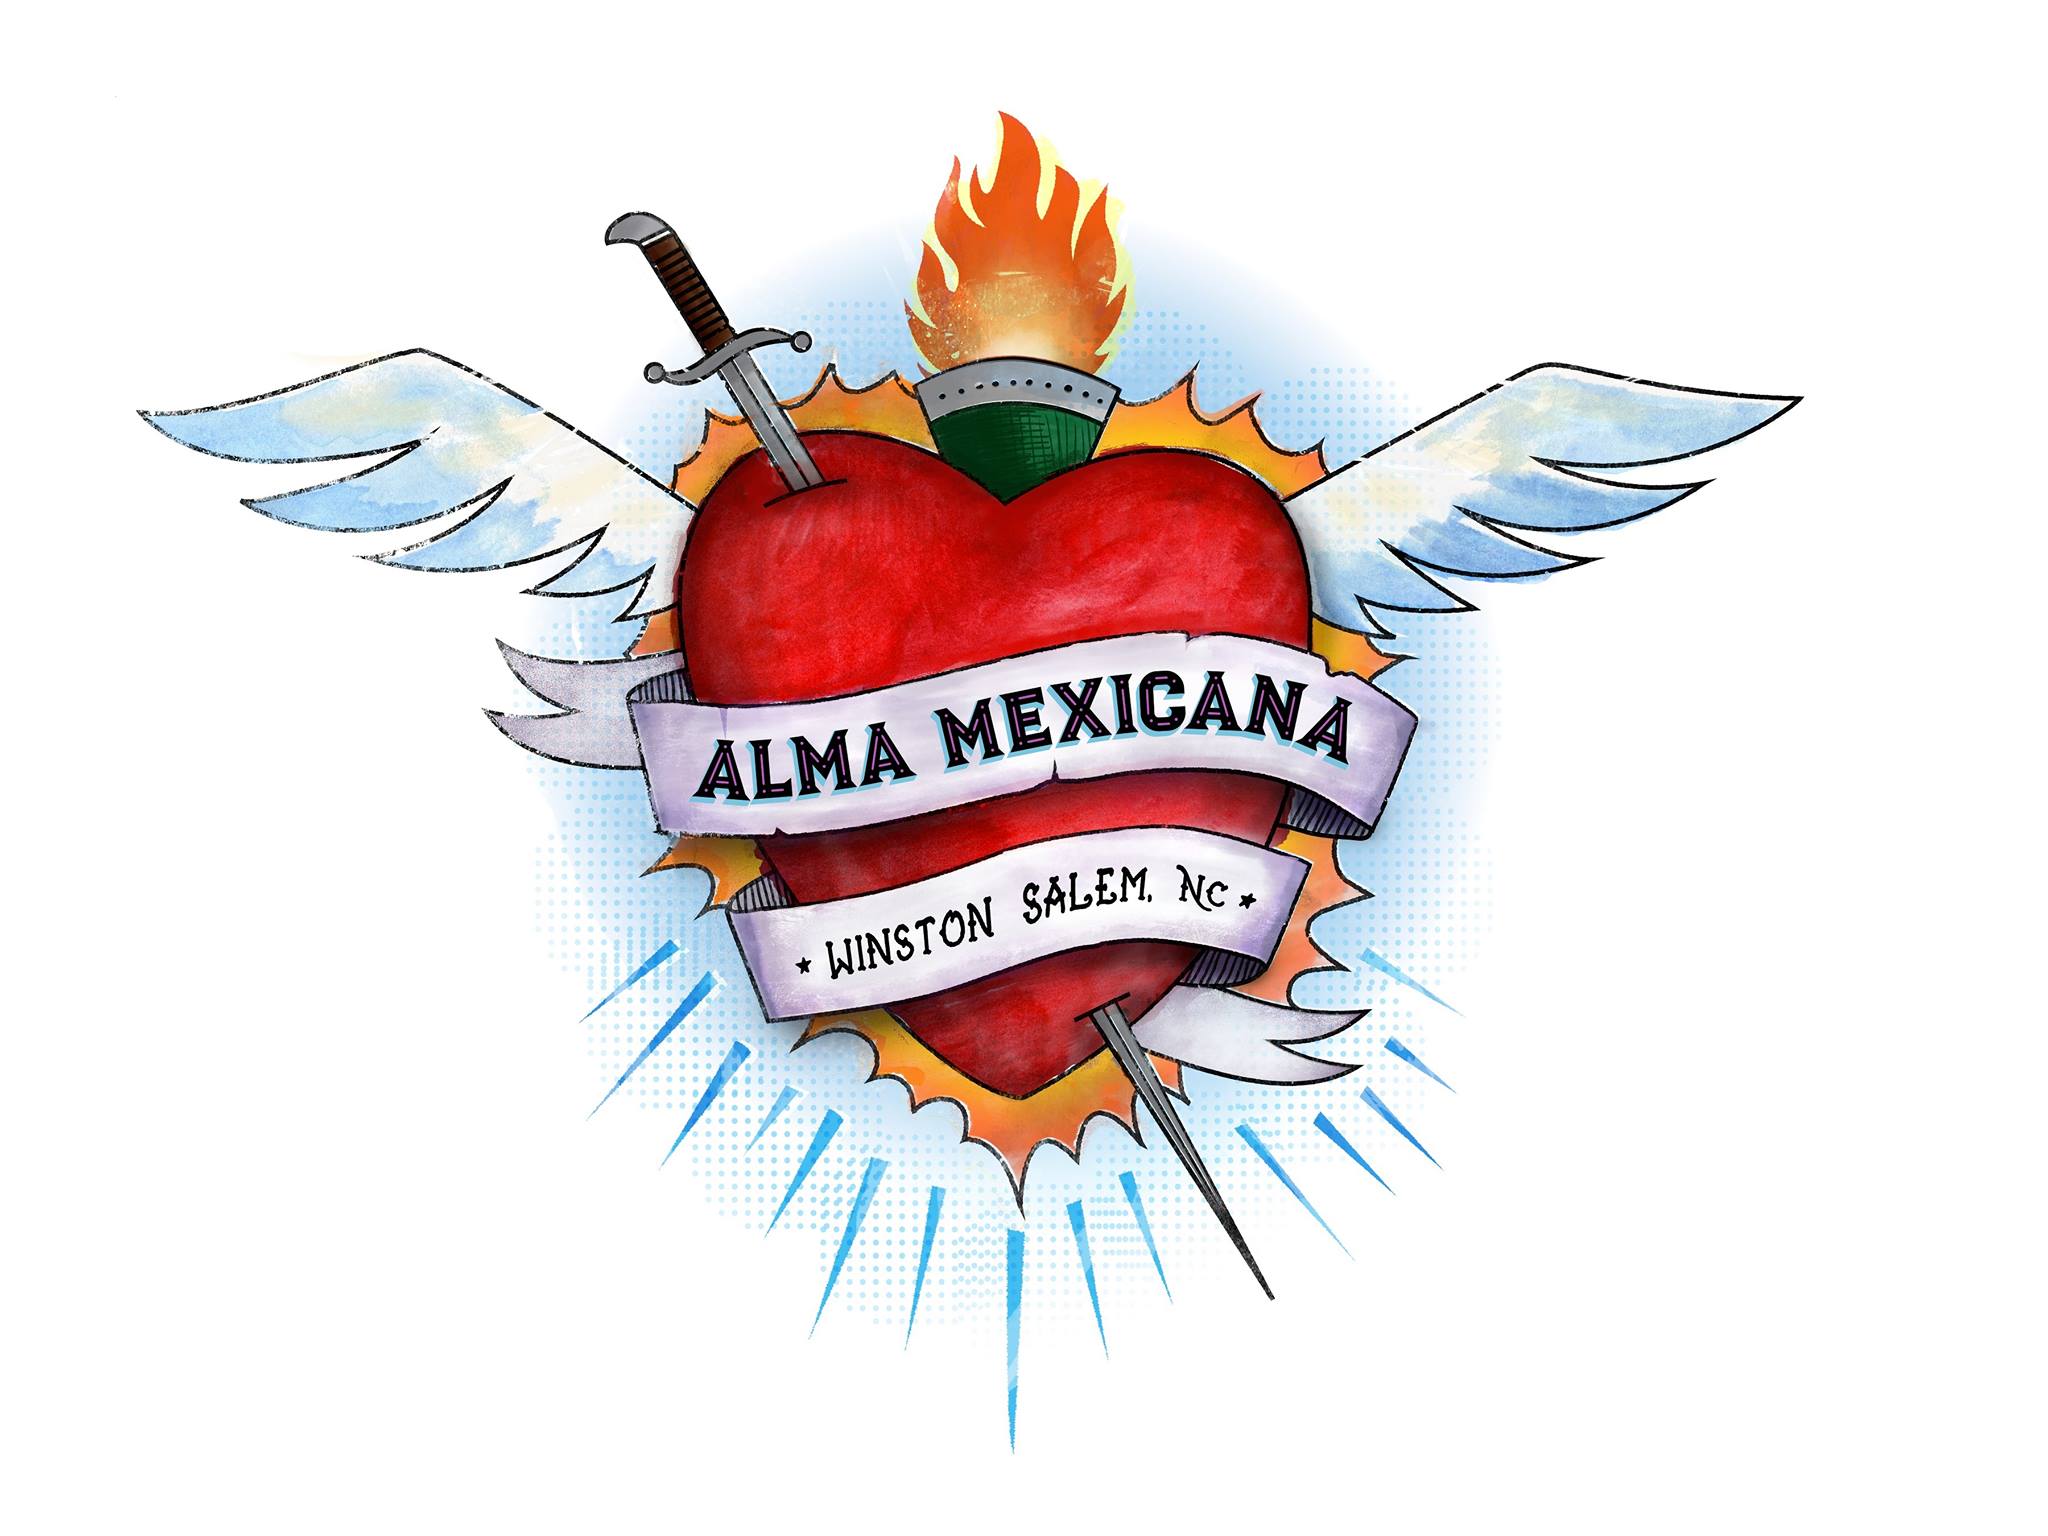 Alma Mexicana